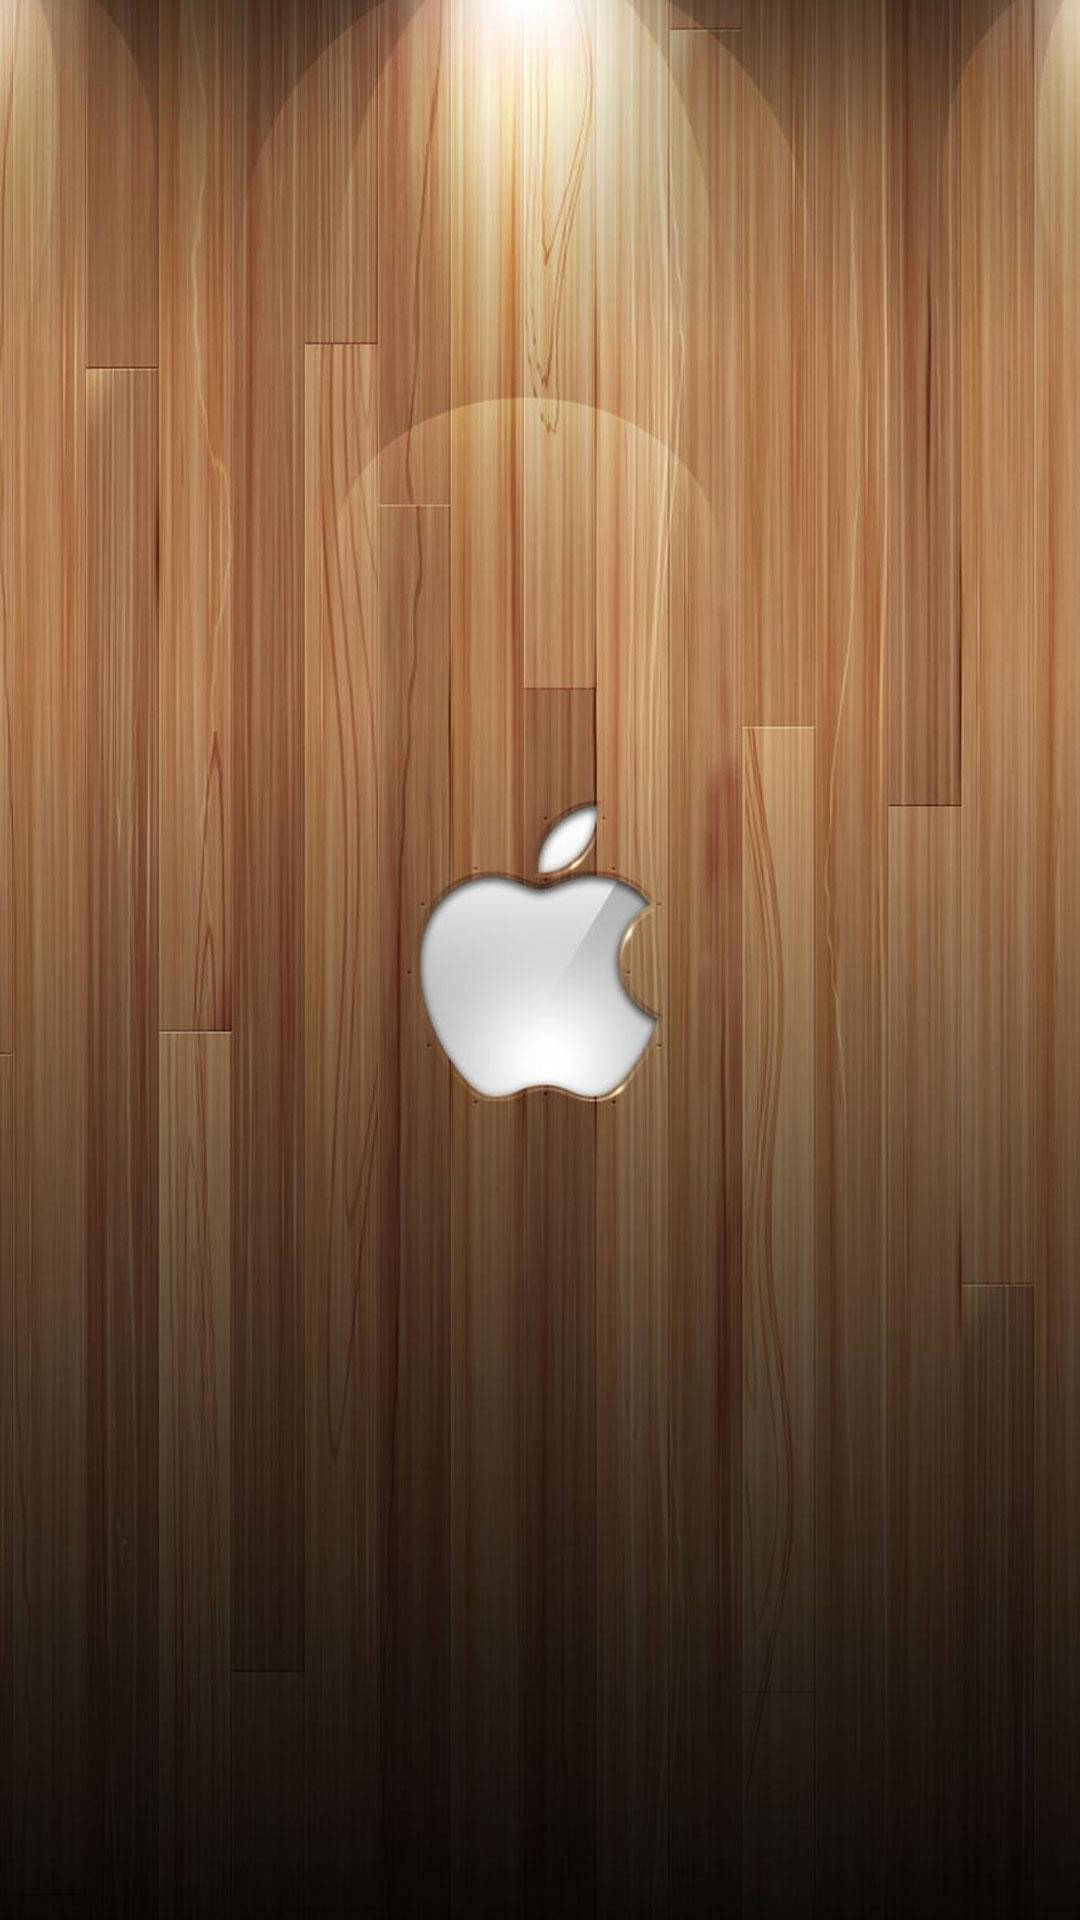 Silver Apple Logo Iphone 6s Plus Wallpaper